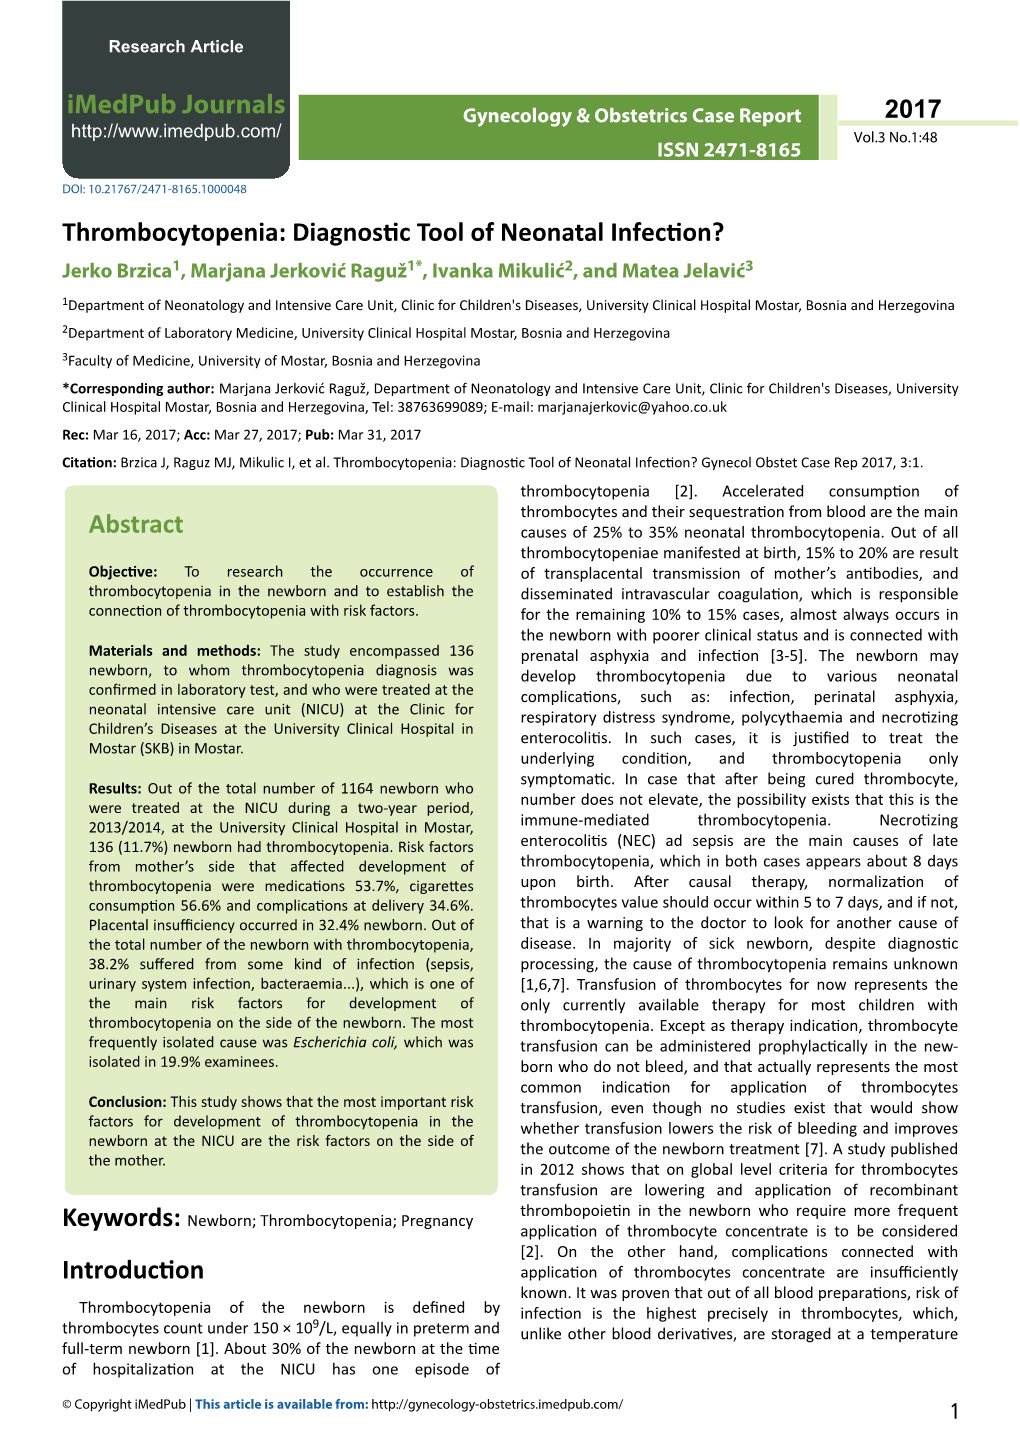 Thrombocytopenia: Diagnostic Tool of Neonatal Infection? Jerko Brzica1, Marjana Jerković Raguž1*, Ivanka Mikulić2, and Matea Jelavić3